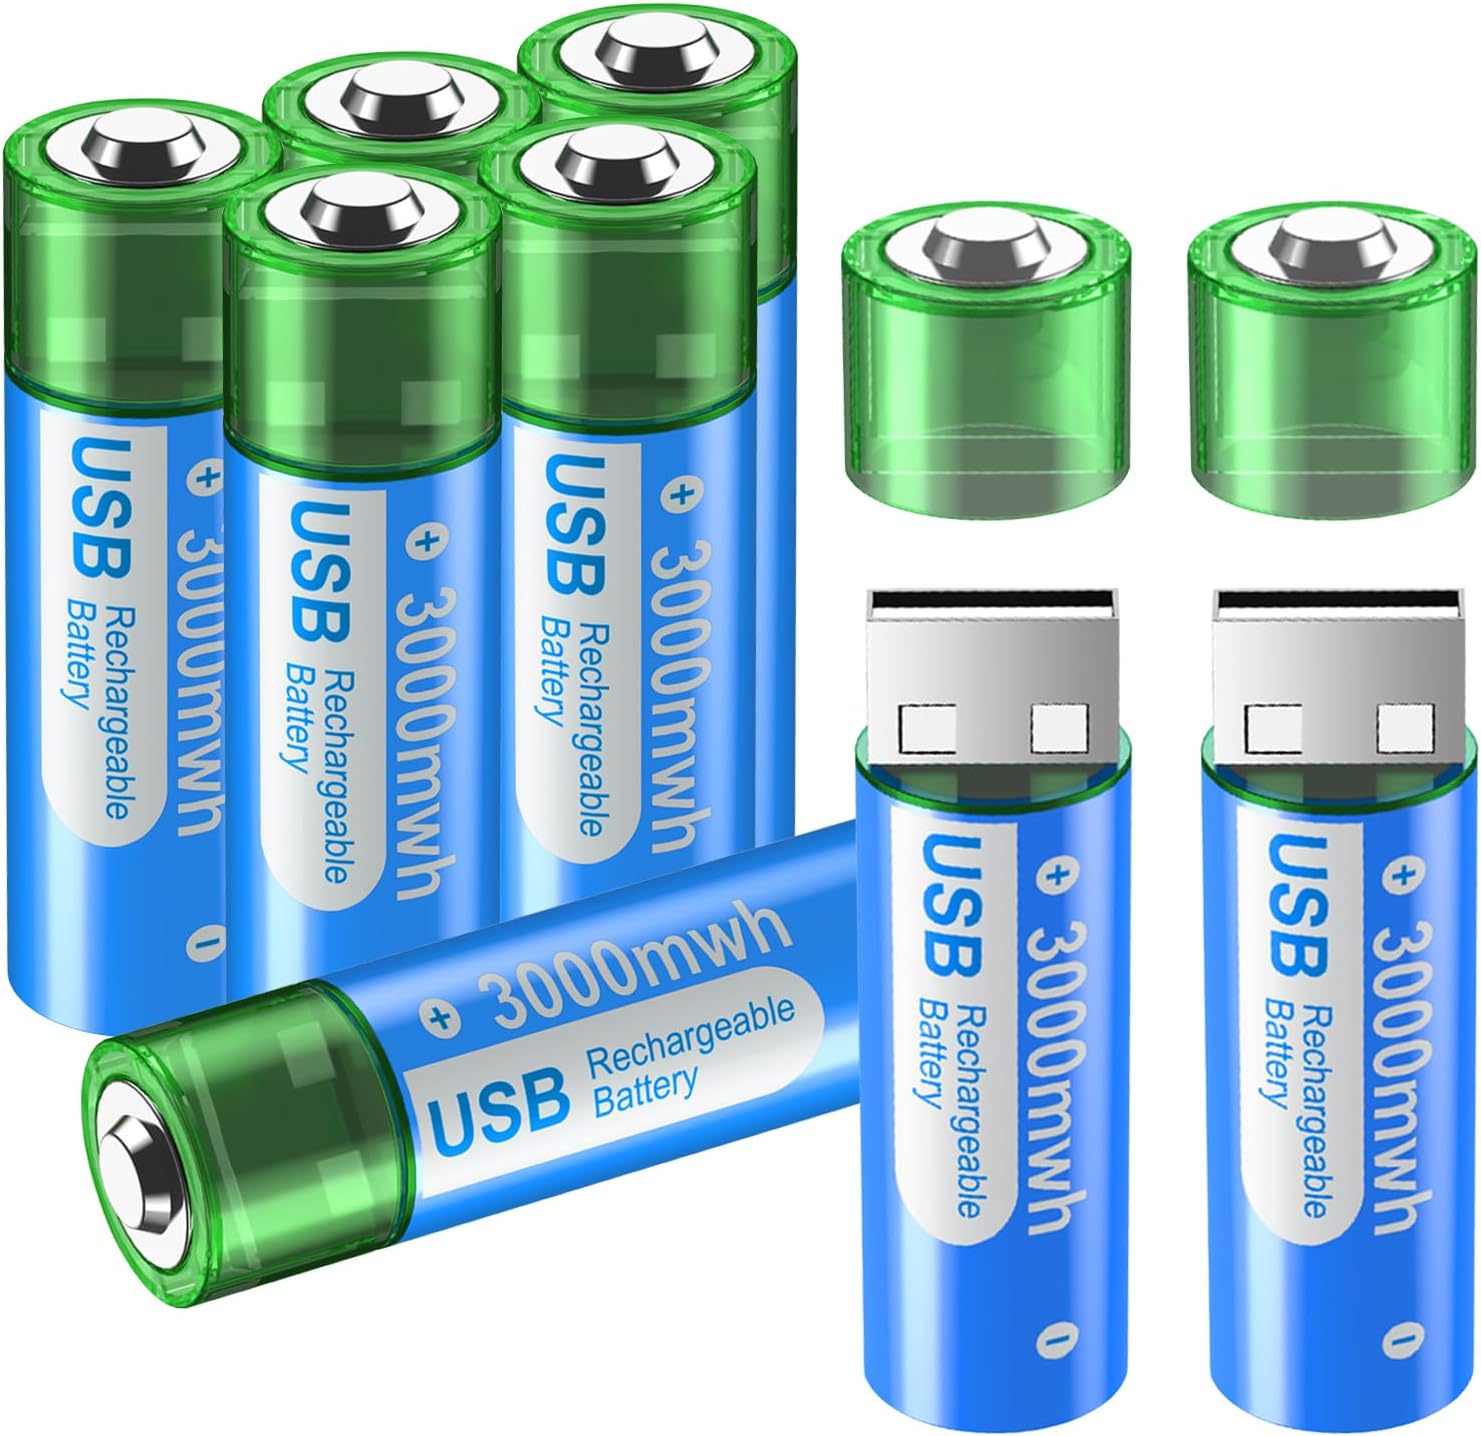 Batterie al litio ricaricabili via USB, set da 8 pezzi: GENIALATA mai vista  prima - Webnews